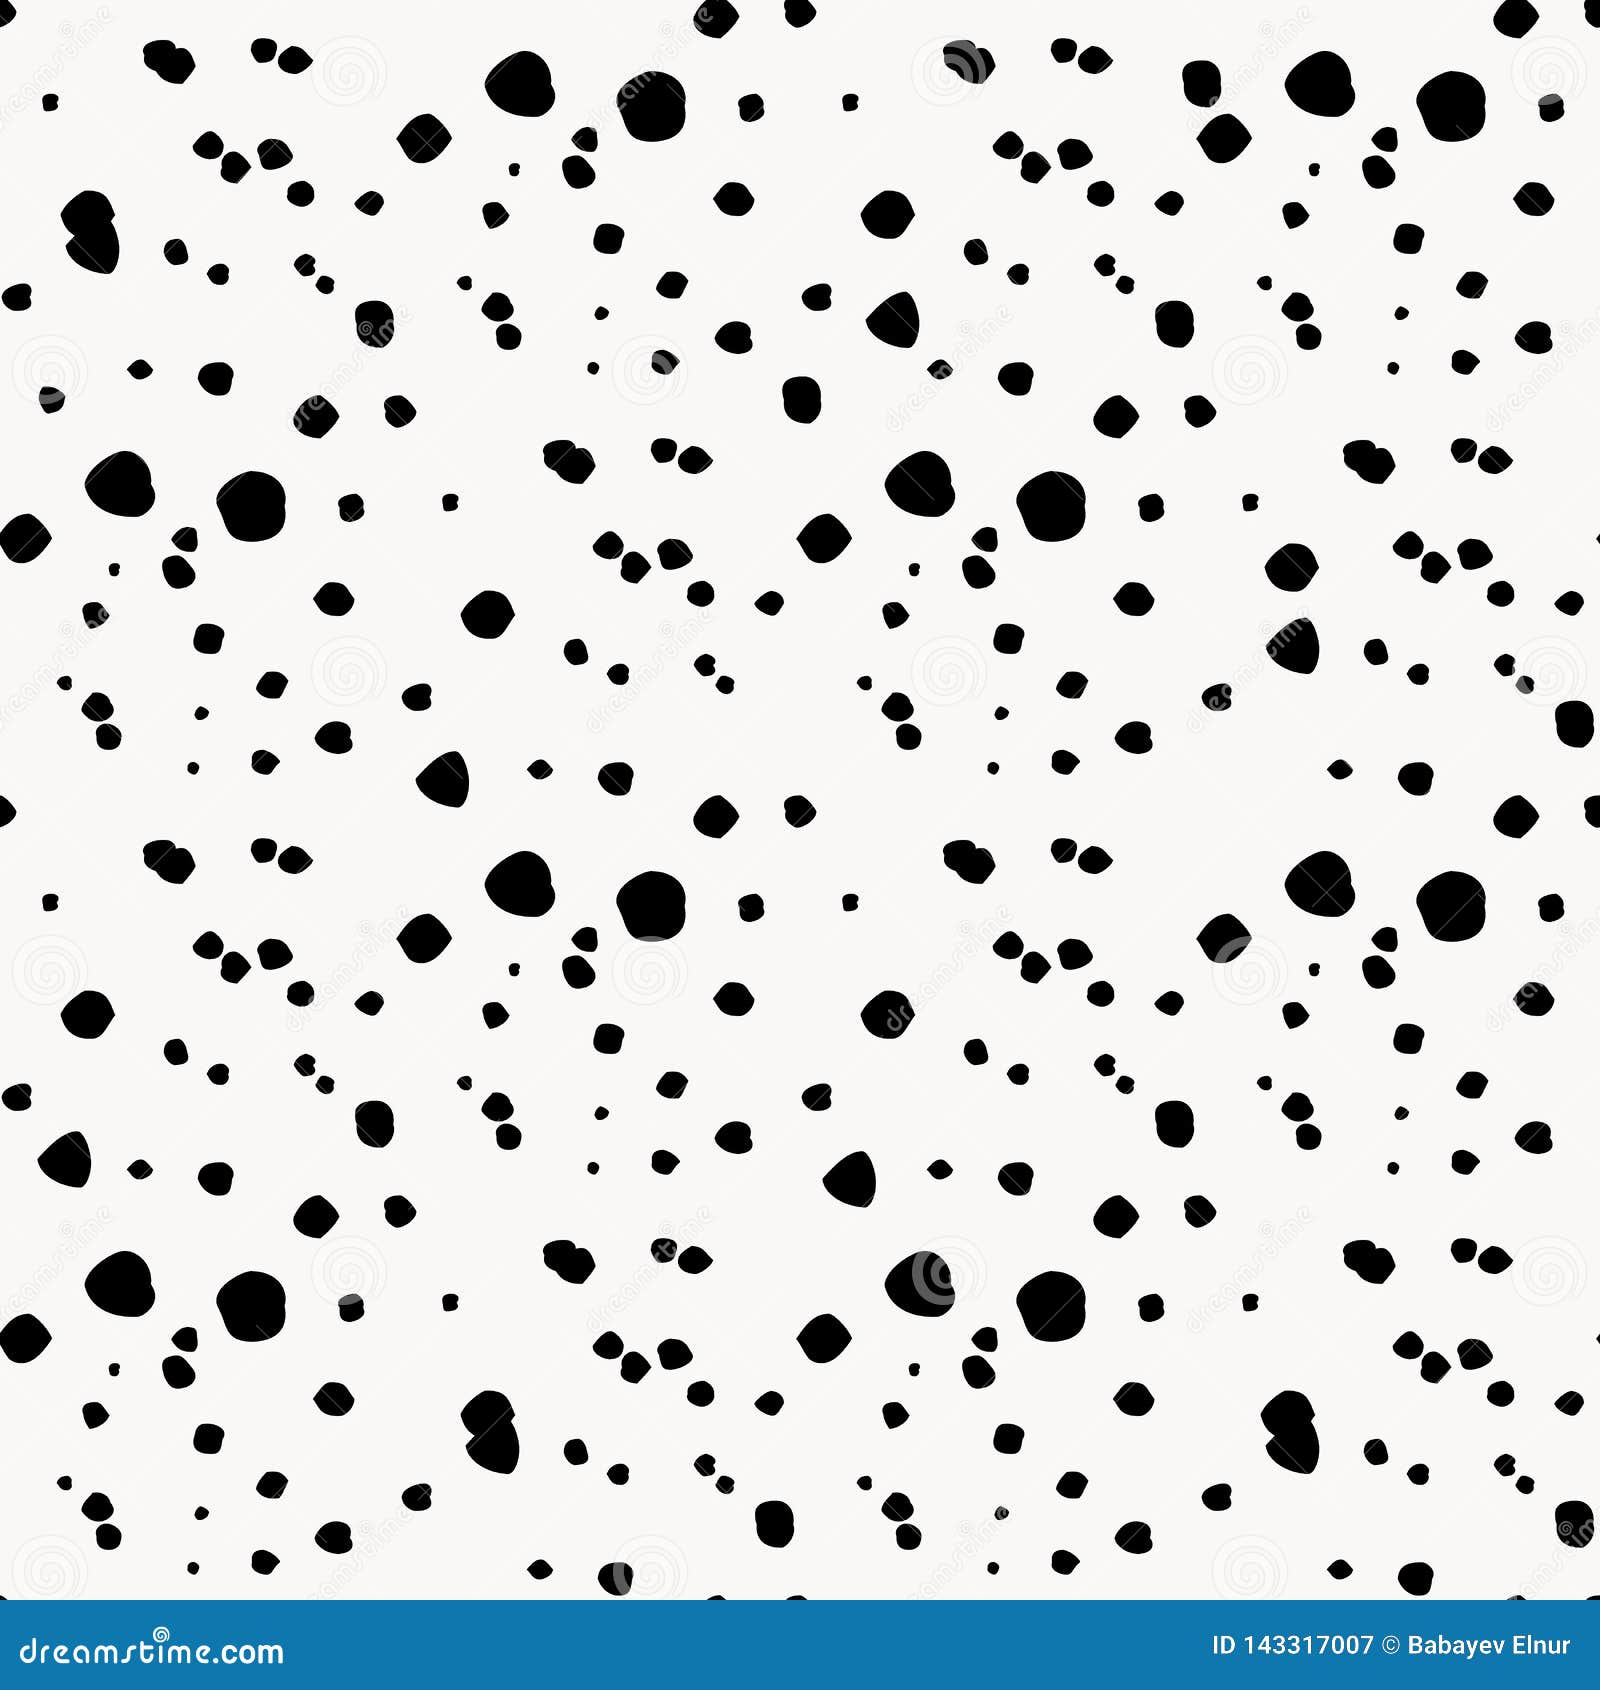 Vector Illustration of Seamless Black and White Irrregular Dots Pattern ...